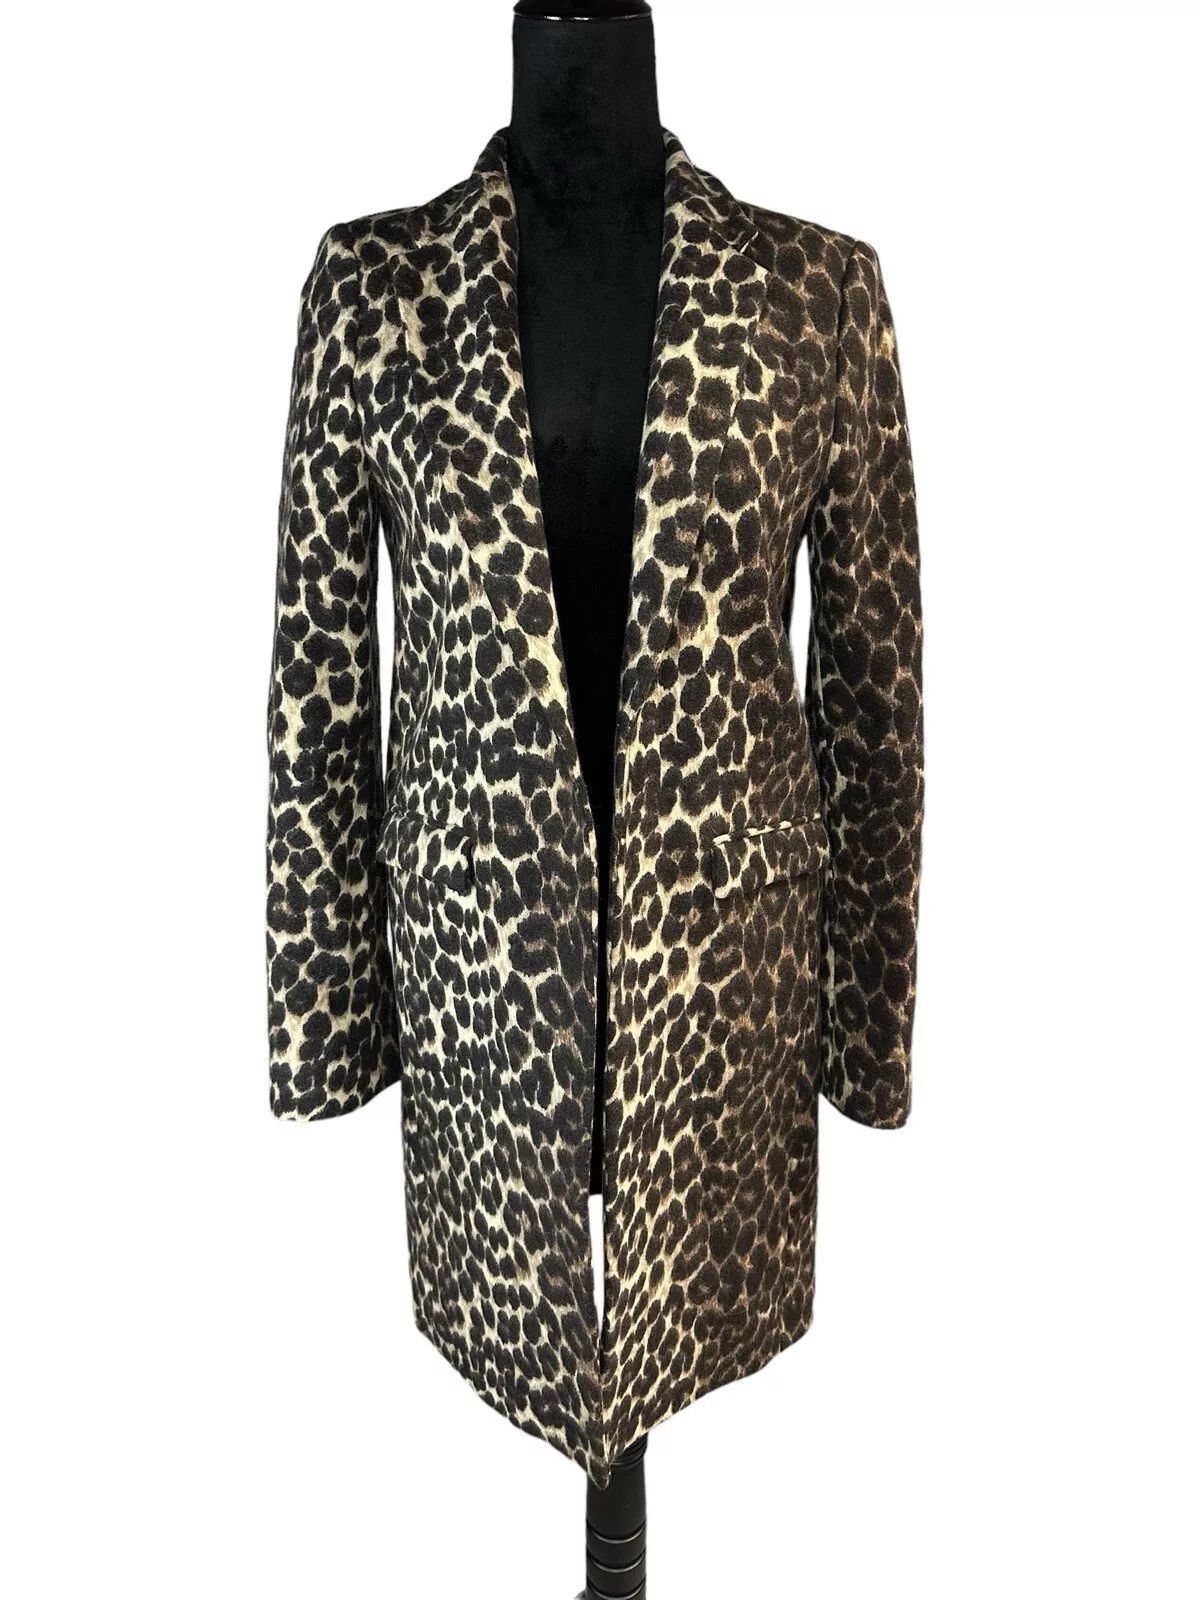 ZARA Leopard print open from Lana Wool Coat Small | eBay CA